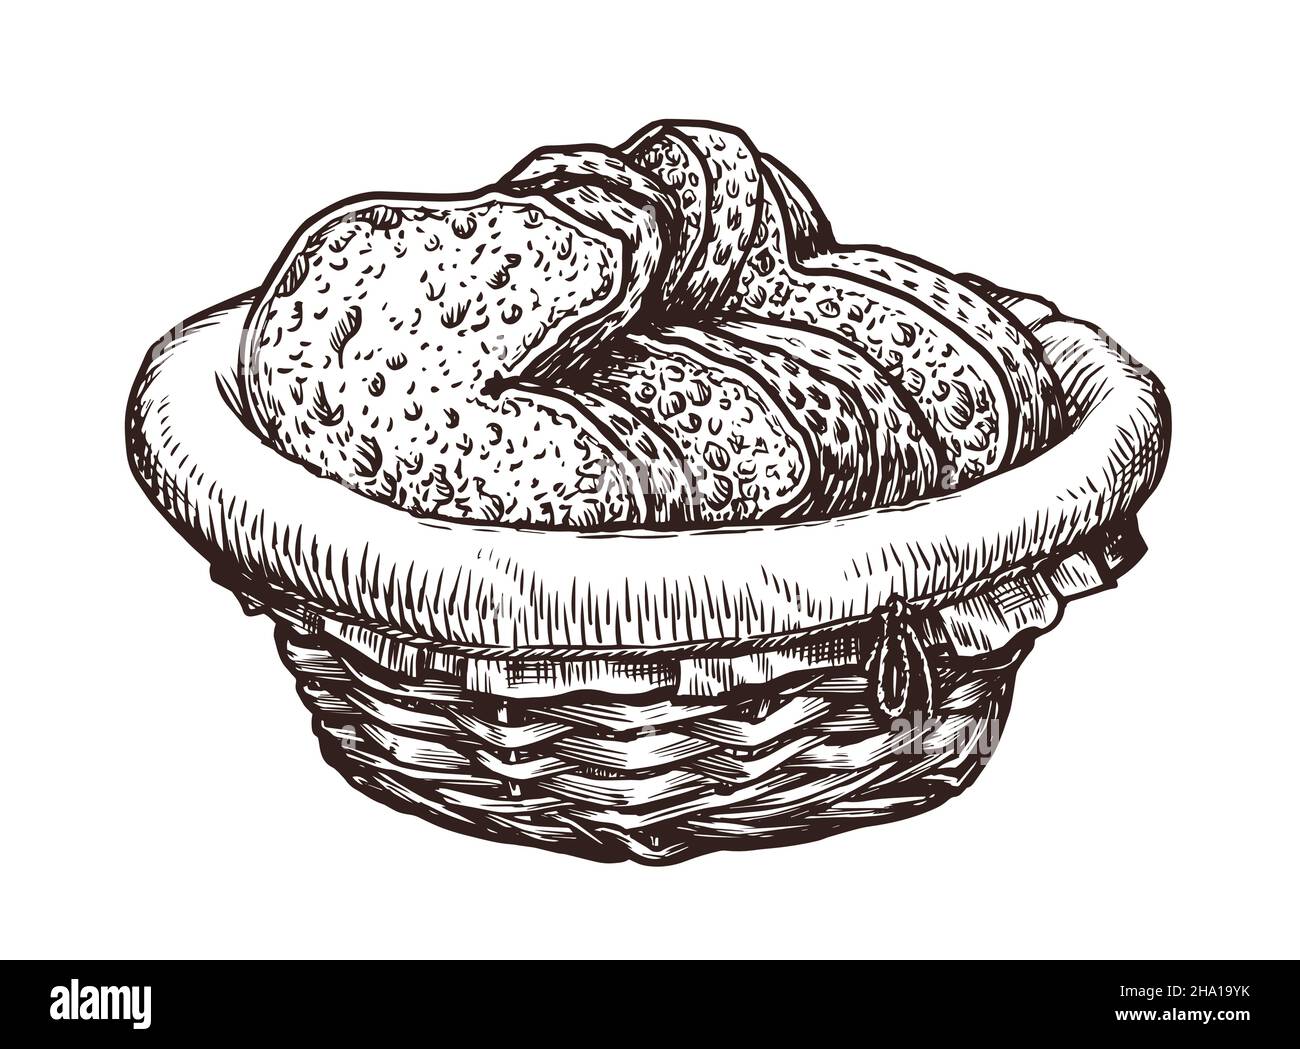 Brotscheiben im Korb. Vektorgrafik Lebensmittel, Bäckerei Skizze Stock Vektor